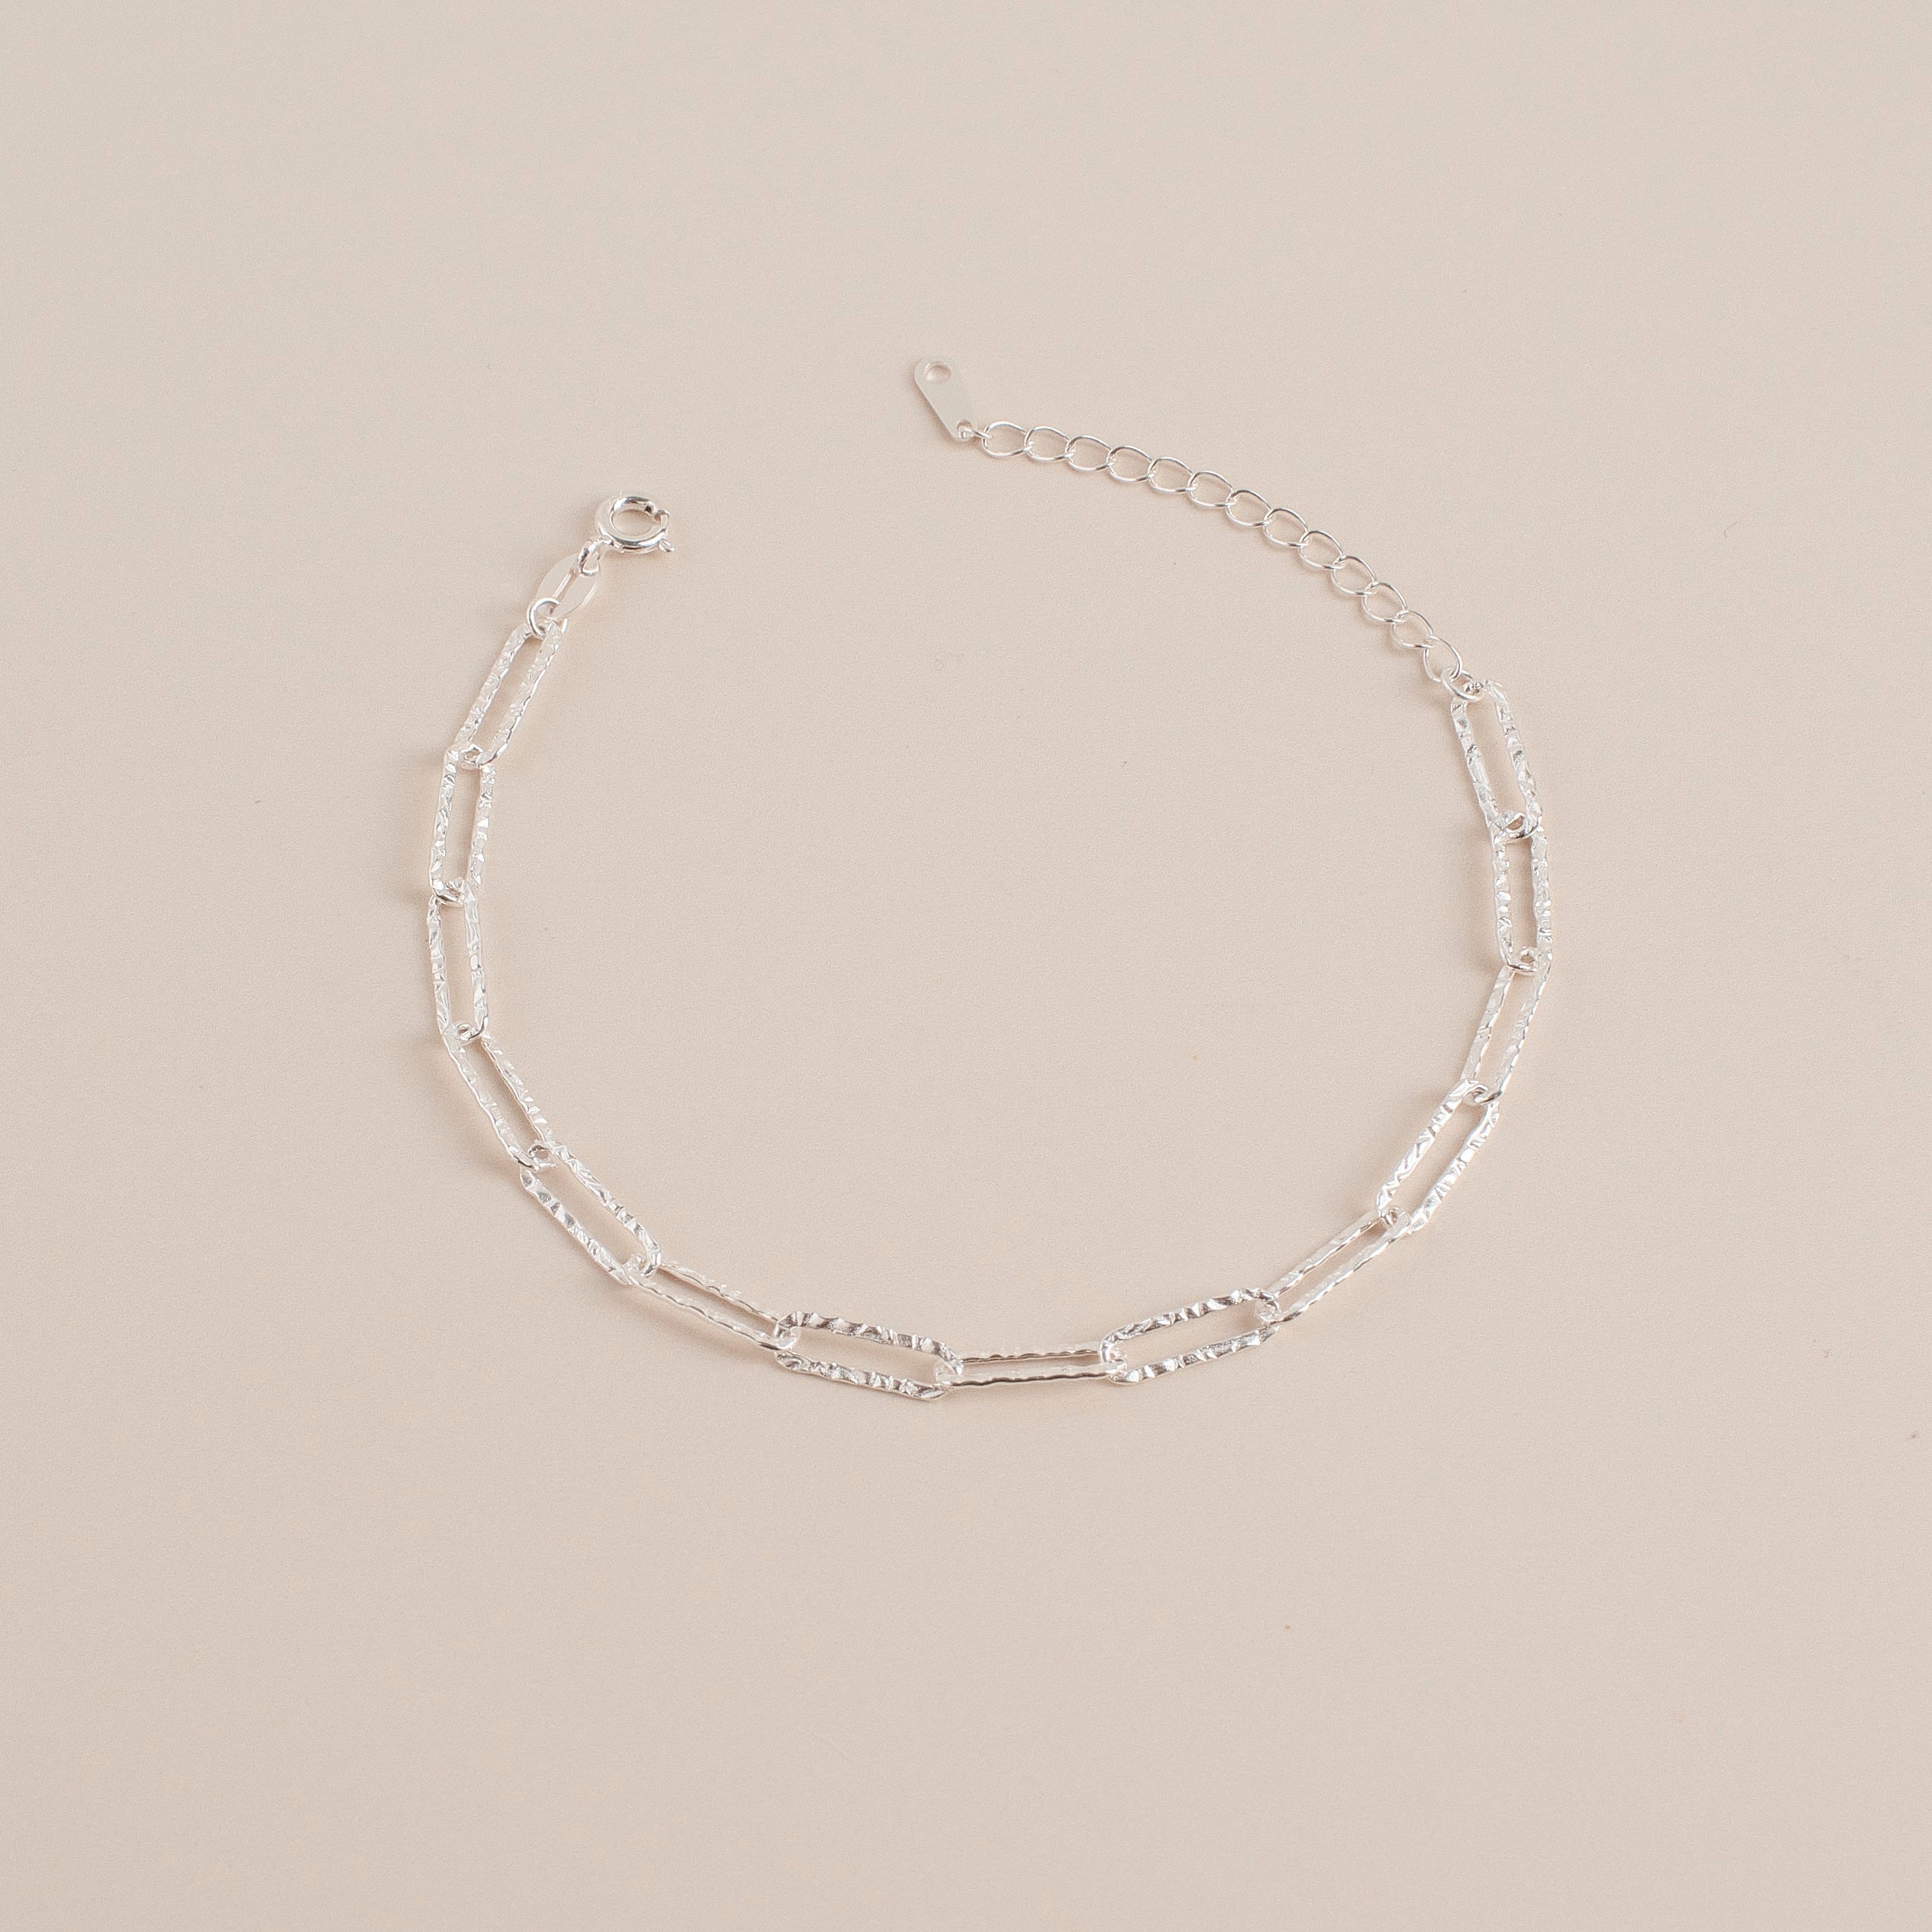 Solid-Link Bracelet in Silver 925